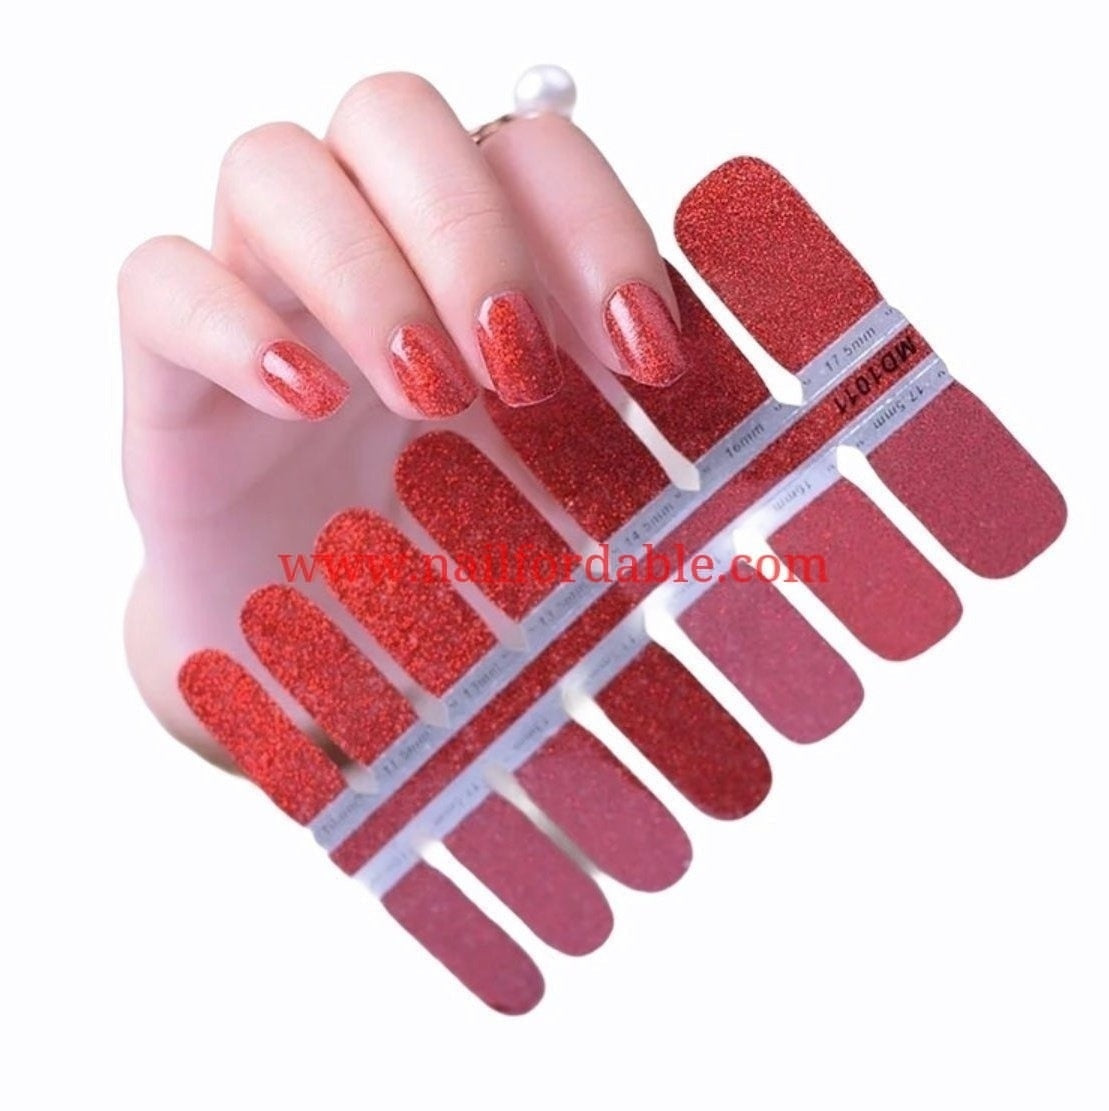 Red glitter Nail Wraps | Semi Cured Gel Wraps | Gel Nail Wraps |Nail Polish | Nail Stickers